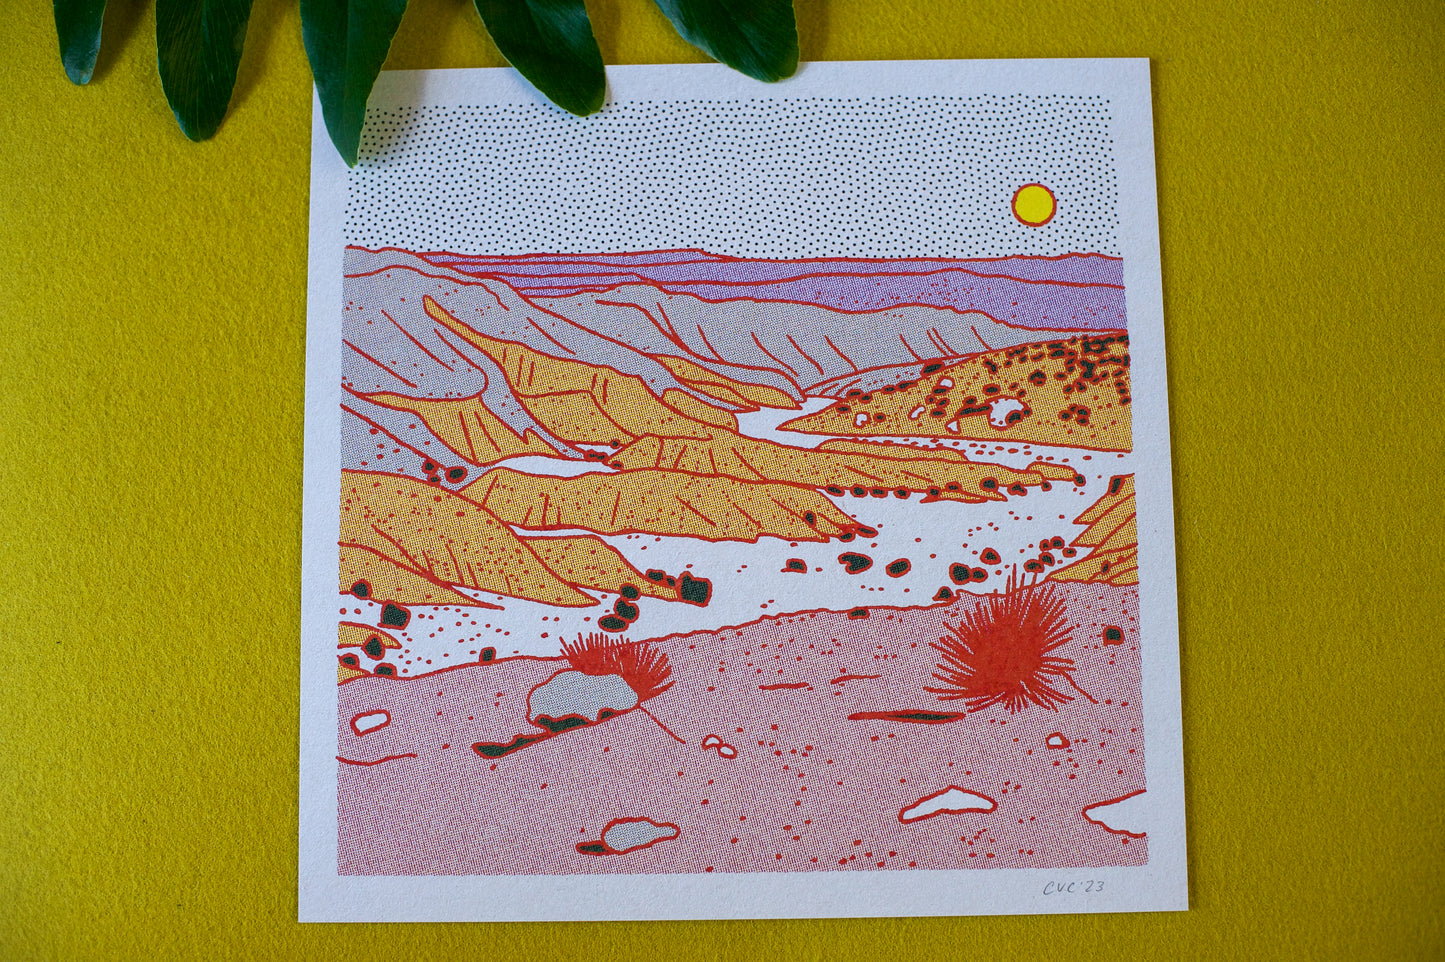 Desert Mountain #7 Print